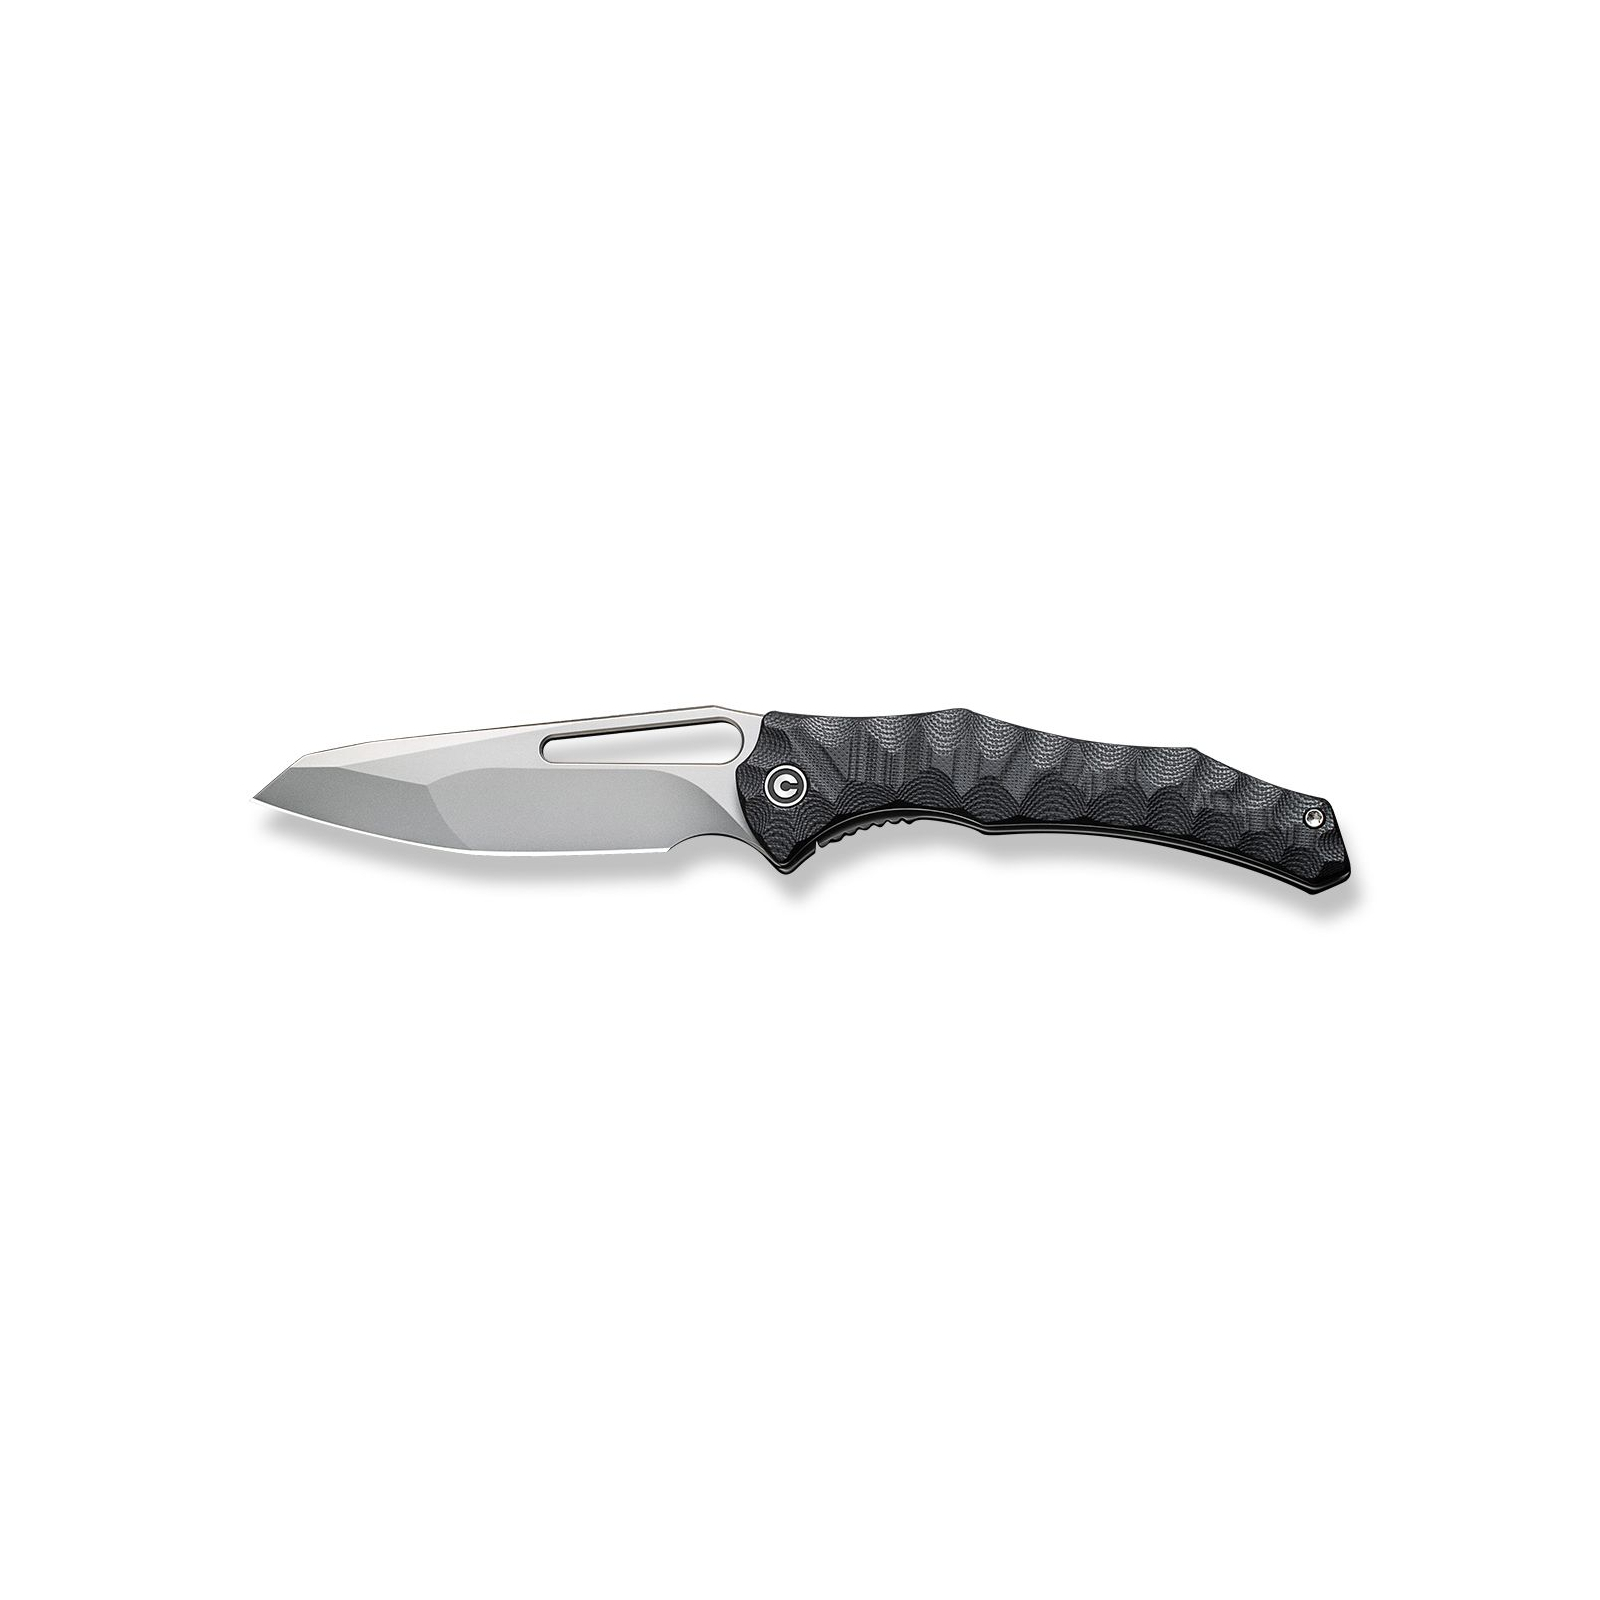 Нож Civivi Spiny Dogfish Black Blade G10 Green (C22006-3)